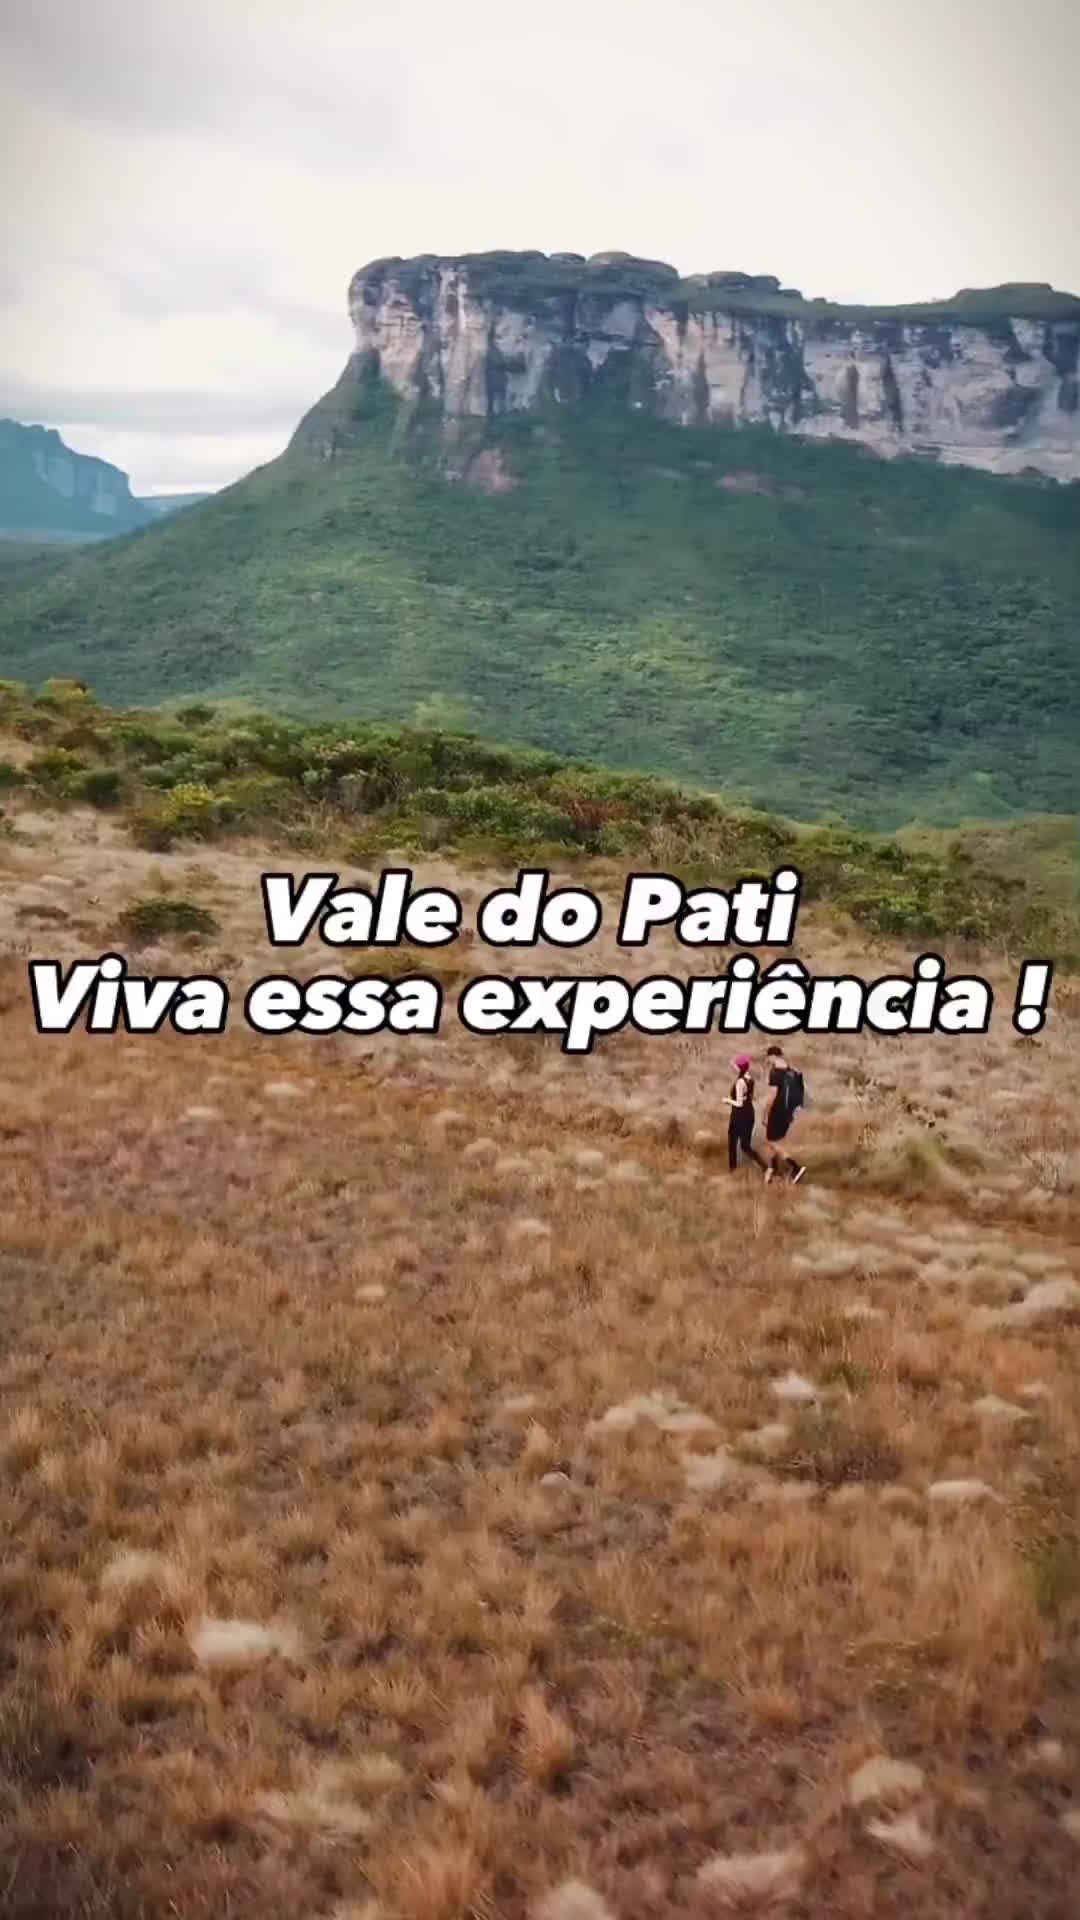 Trekking in Vale do Pati: Brazil's Most Beautiful Adventure